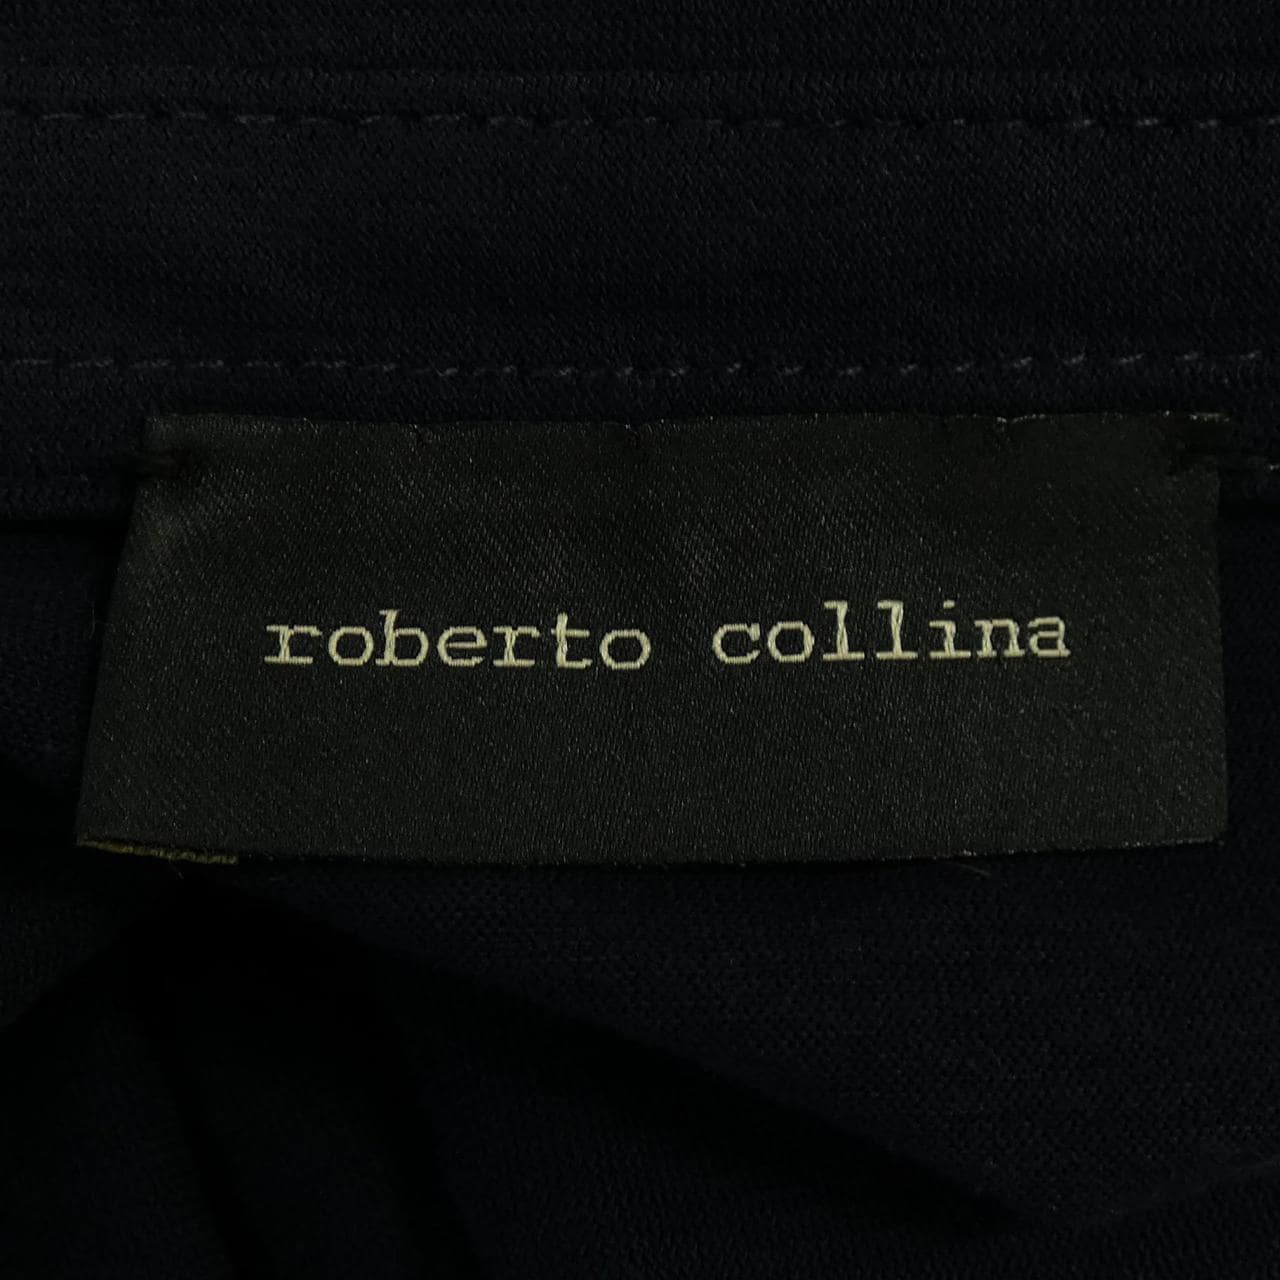 Roberto Collina shirt